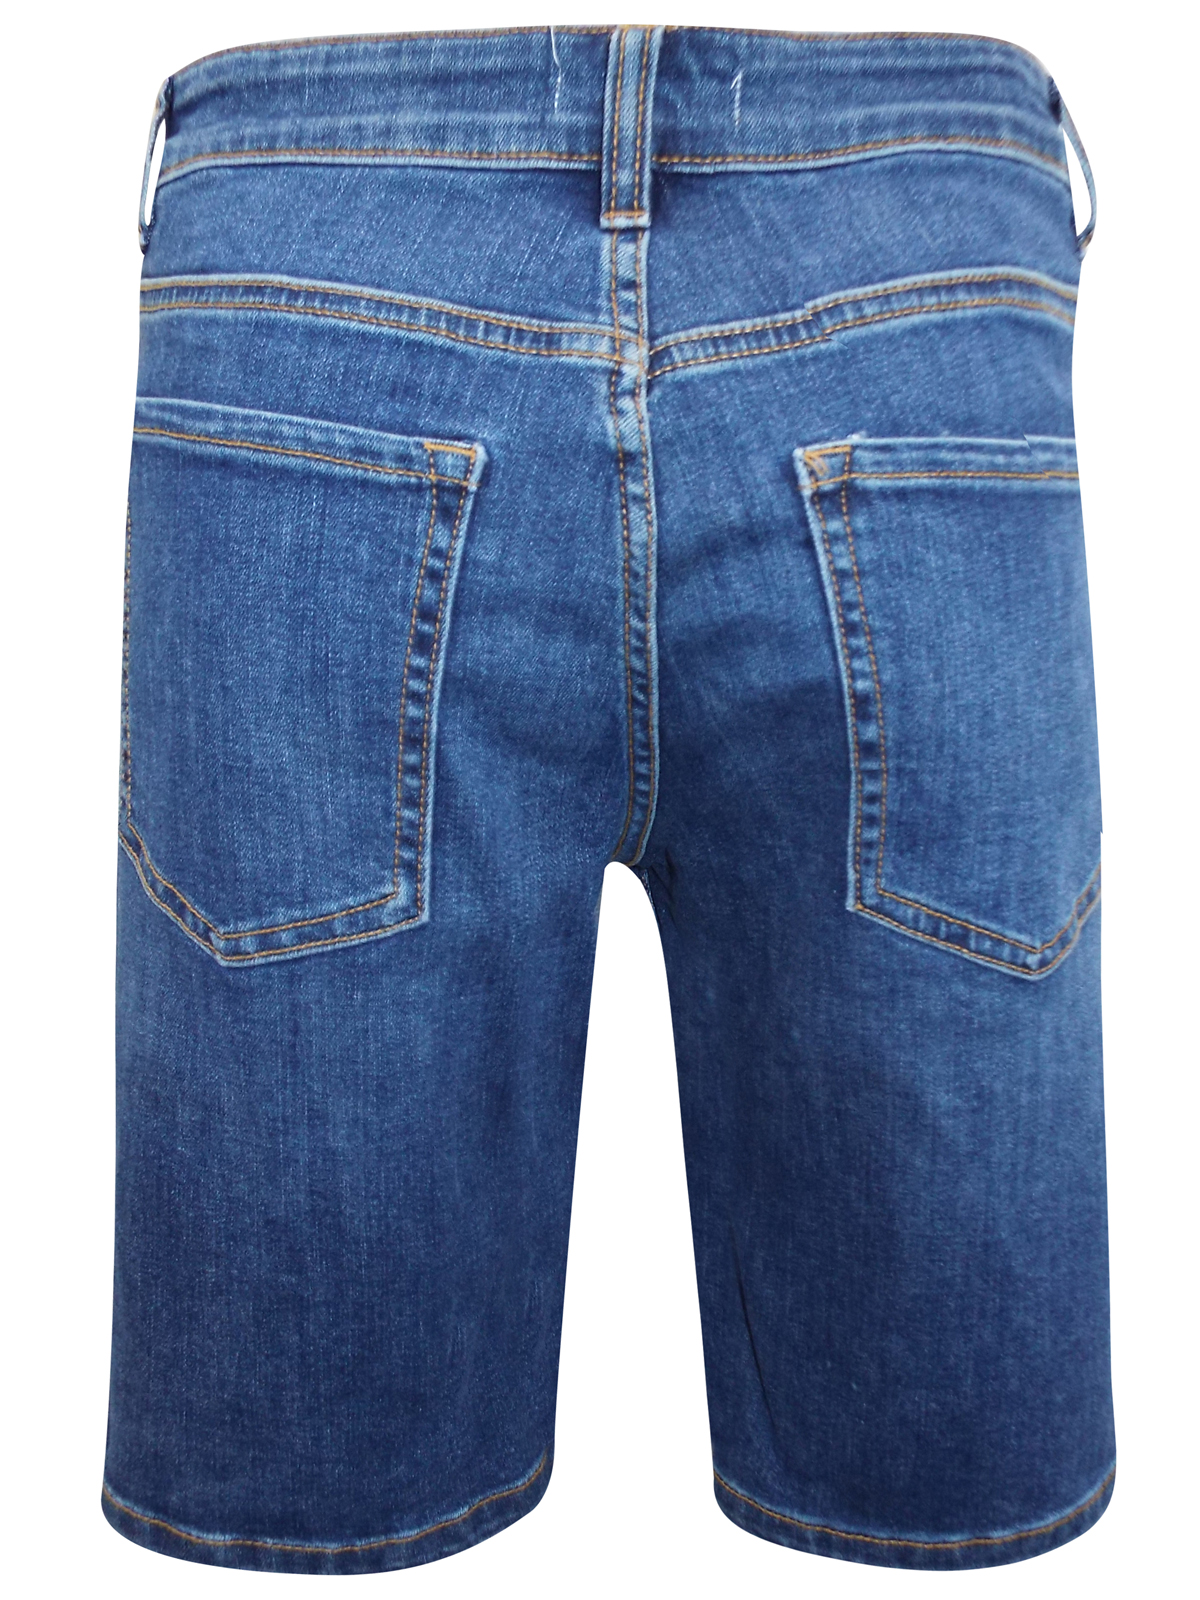 M4ngo ASSORTED Cotton Rich 5-Pocket Denim Shorts - Waist Size 30 to 36